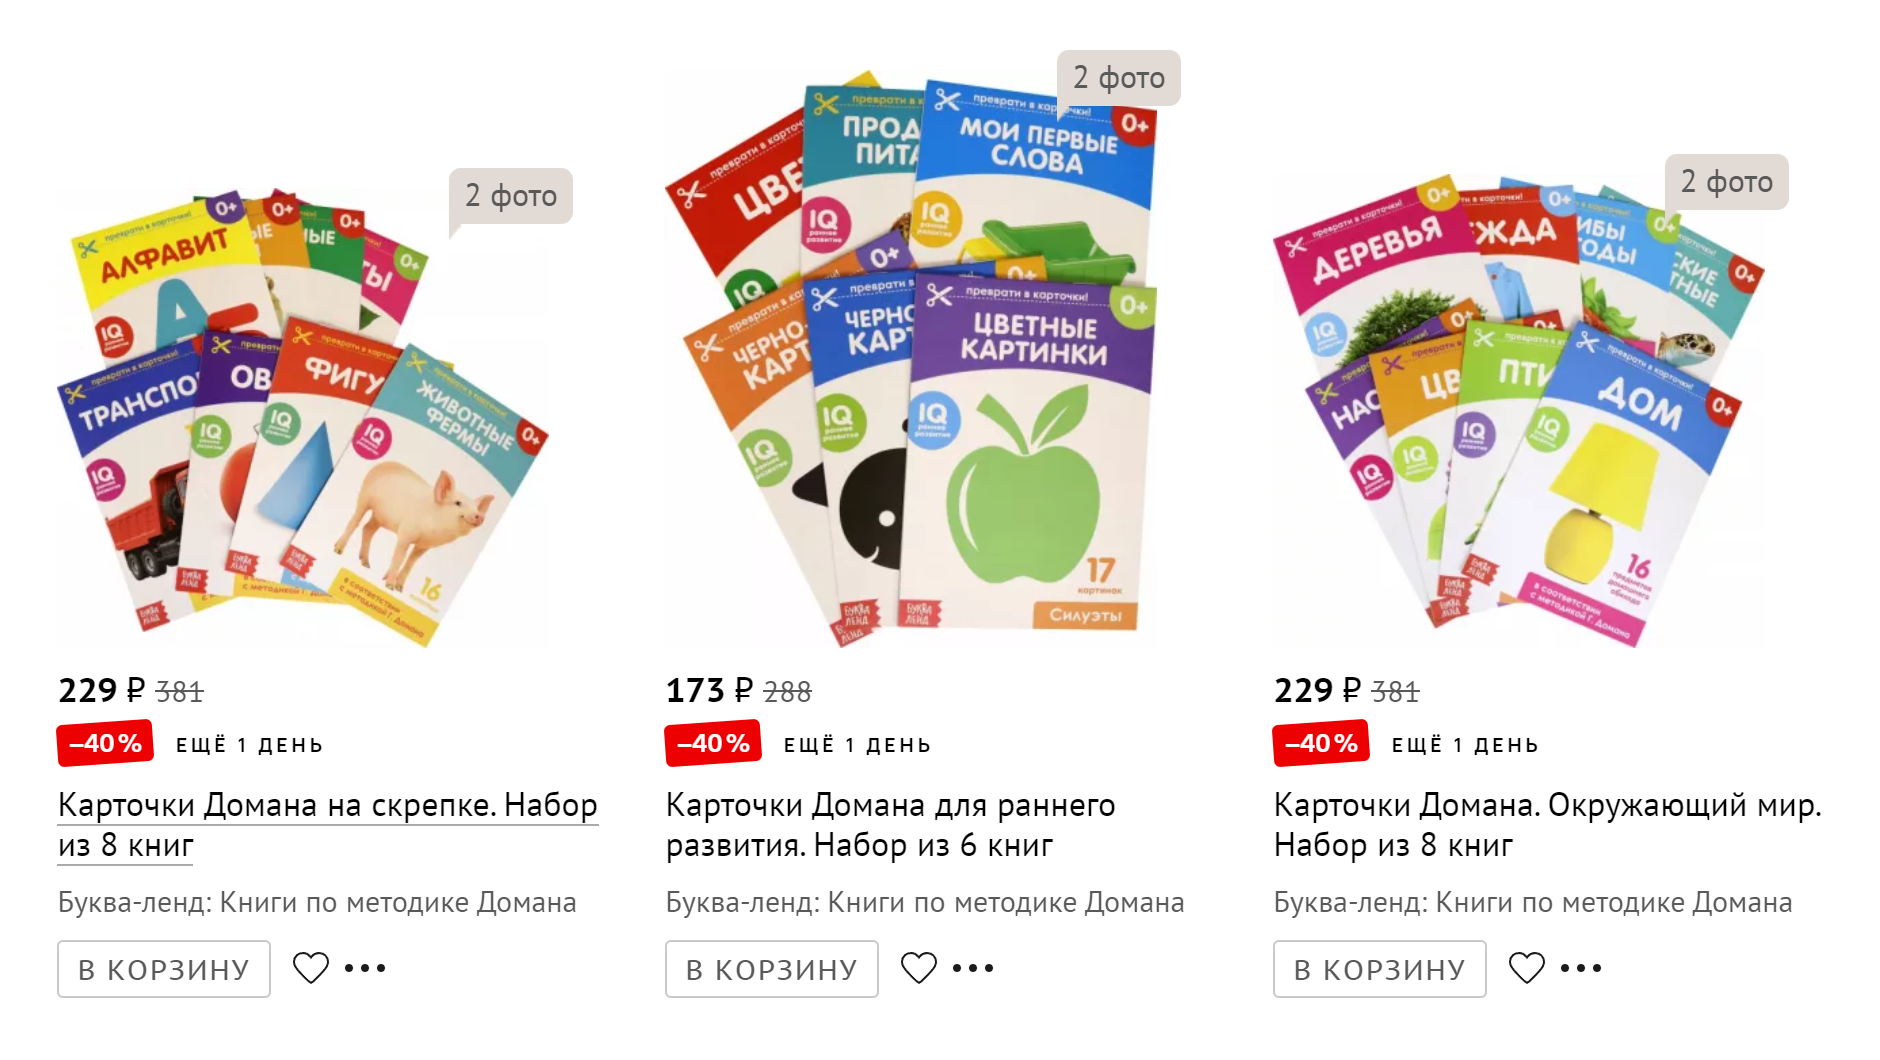 Карточки Домана можно найти на многих маркетплейсах. Цена — около 200 ₽ за комплект. Источник: labirint.ru